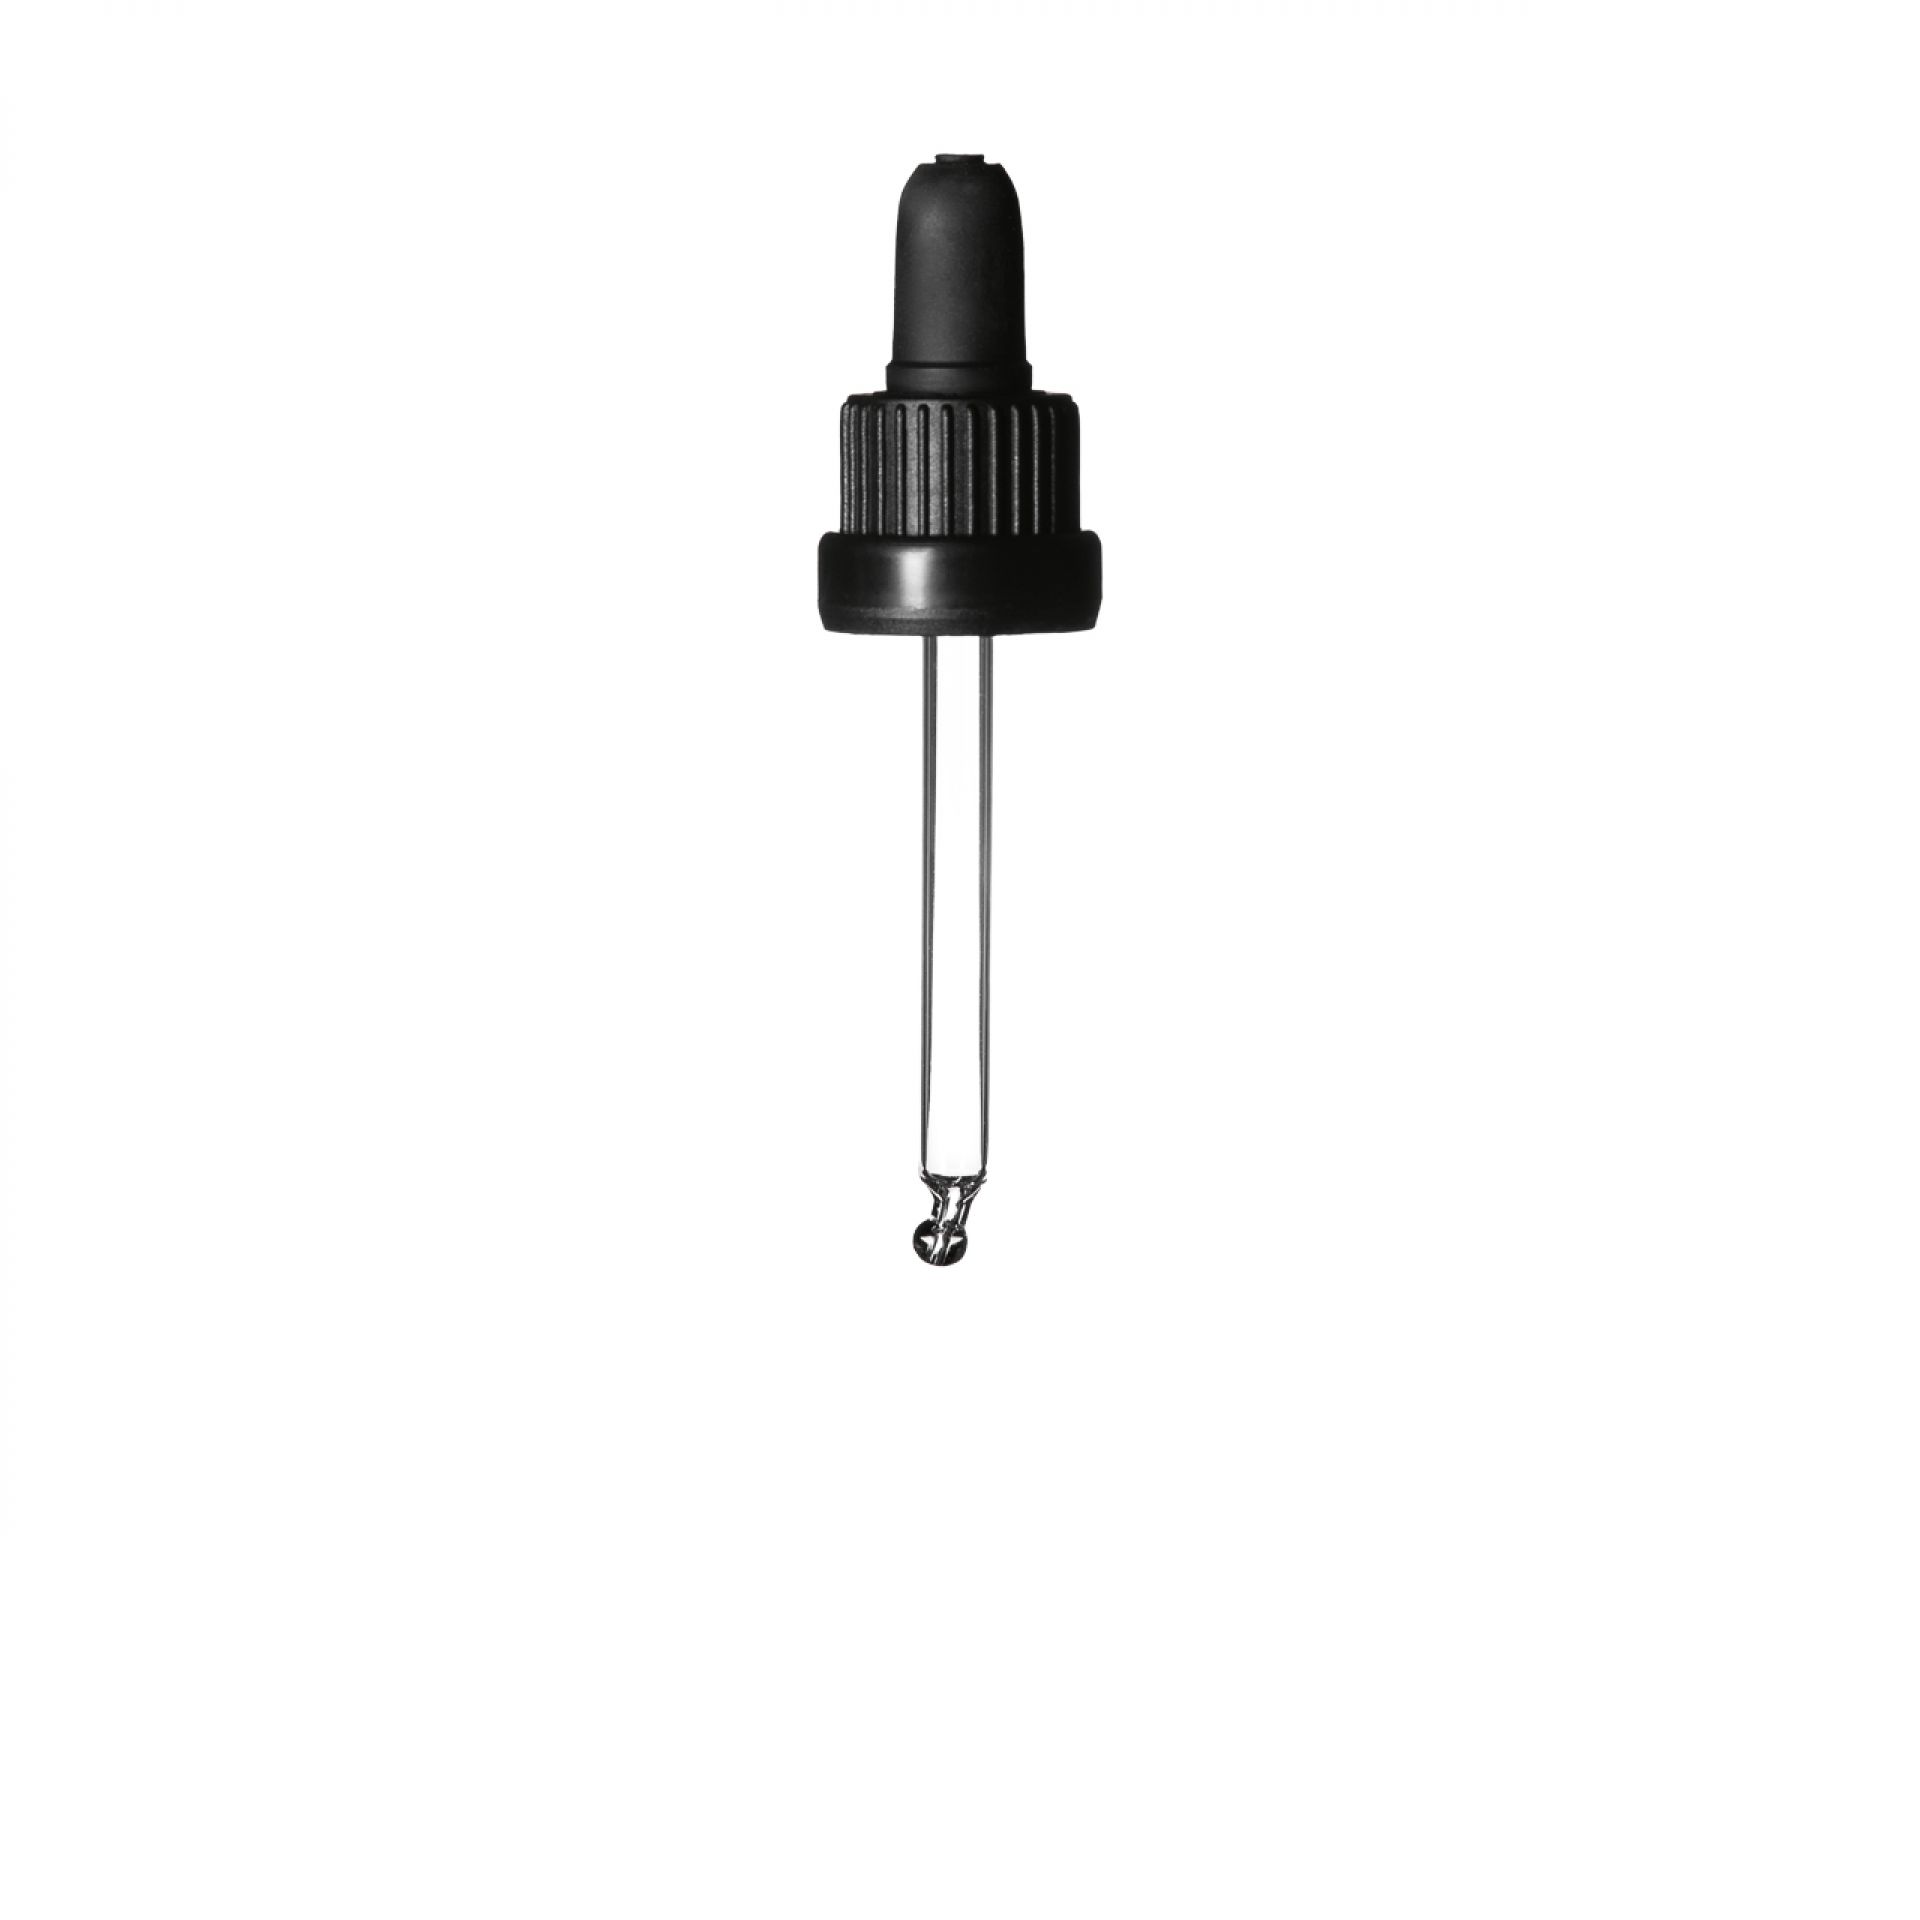 Pipette tamper evident DIN18, III, black, ribbed, bulb TPE, dose 0.7ml, bent ball tip (Orion 30) 